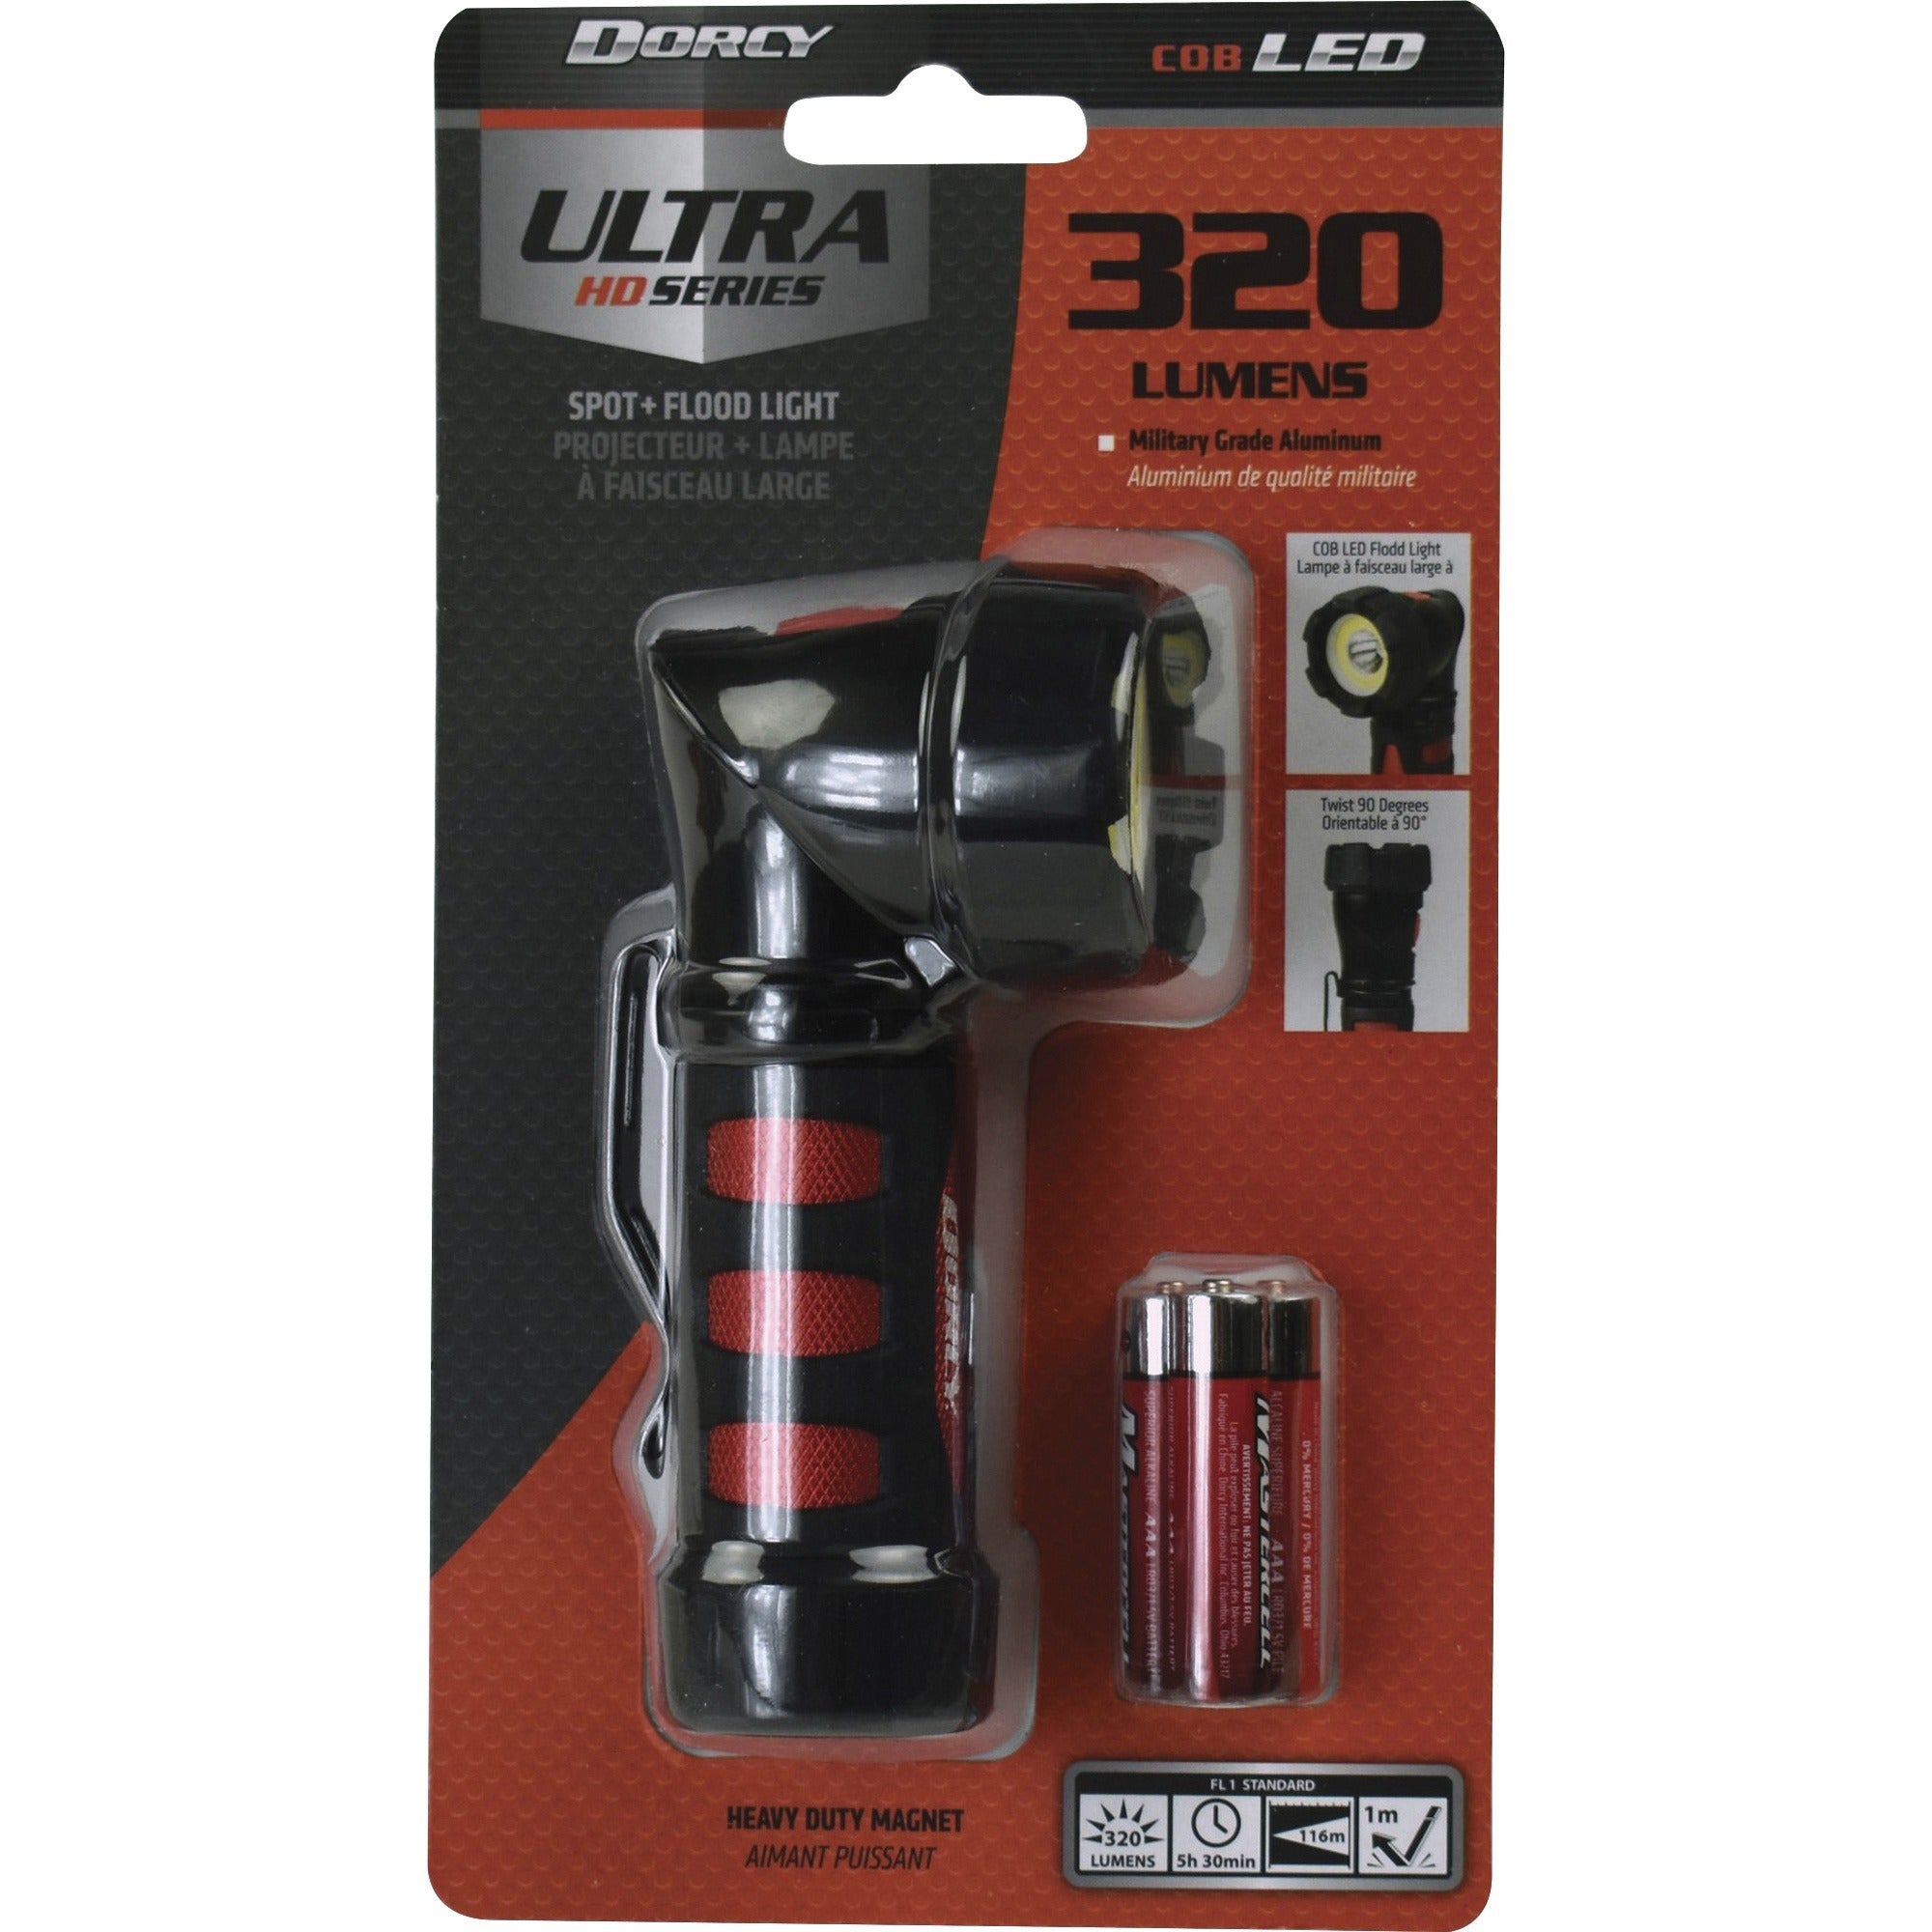 dorcy-ultra-hd-series-cob-swivel-flashlight-led-320-lm-lumen-3-x-aaa-battery-metal-impact-resistant-black-red_dcy414349 - 1